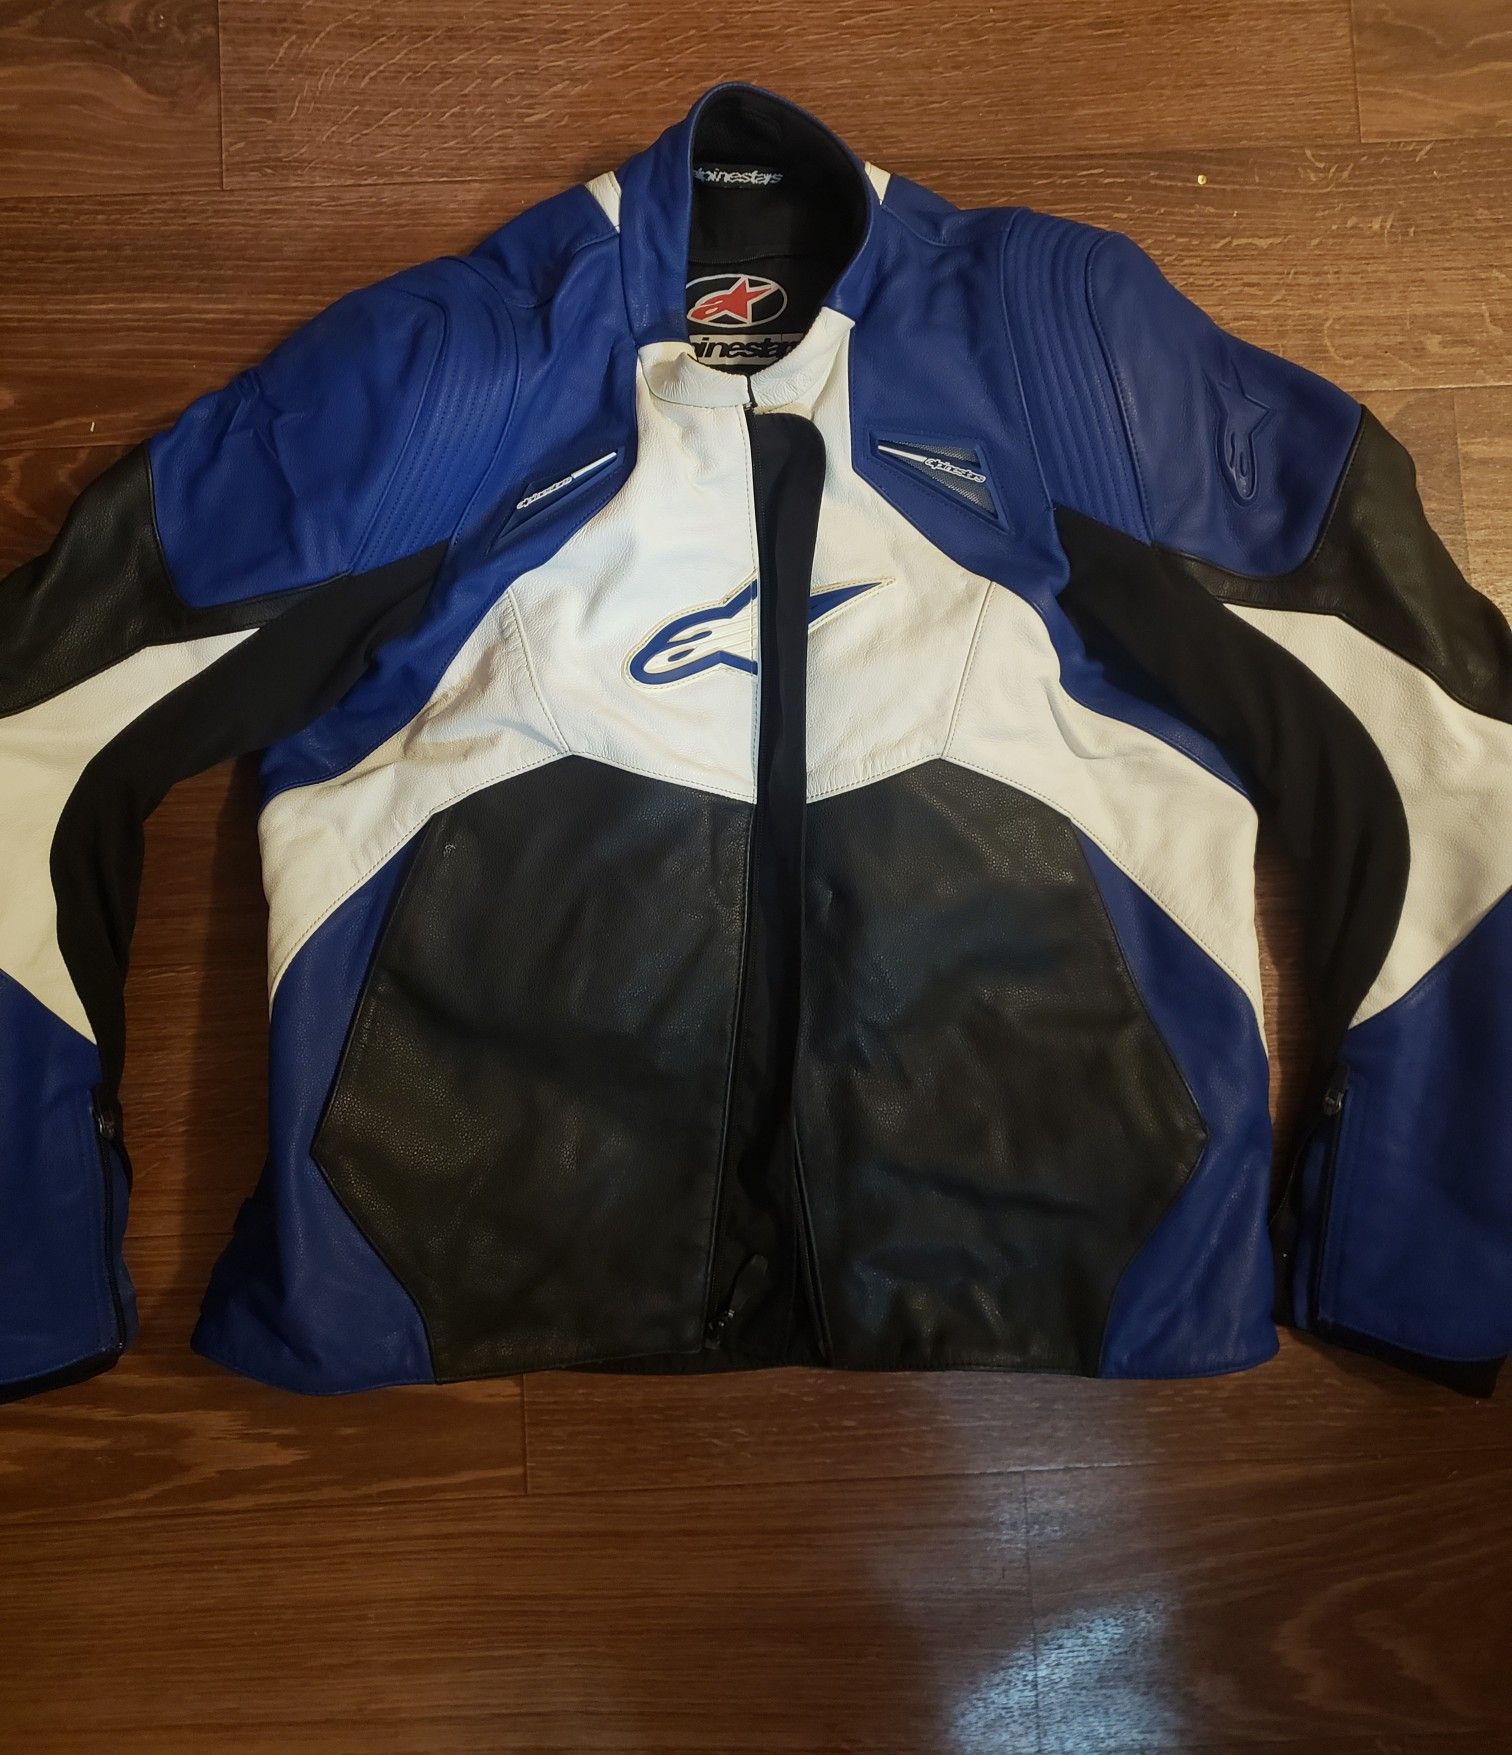 Alpine star leather motorcycle jacket